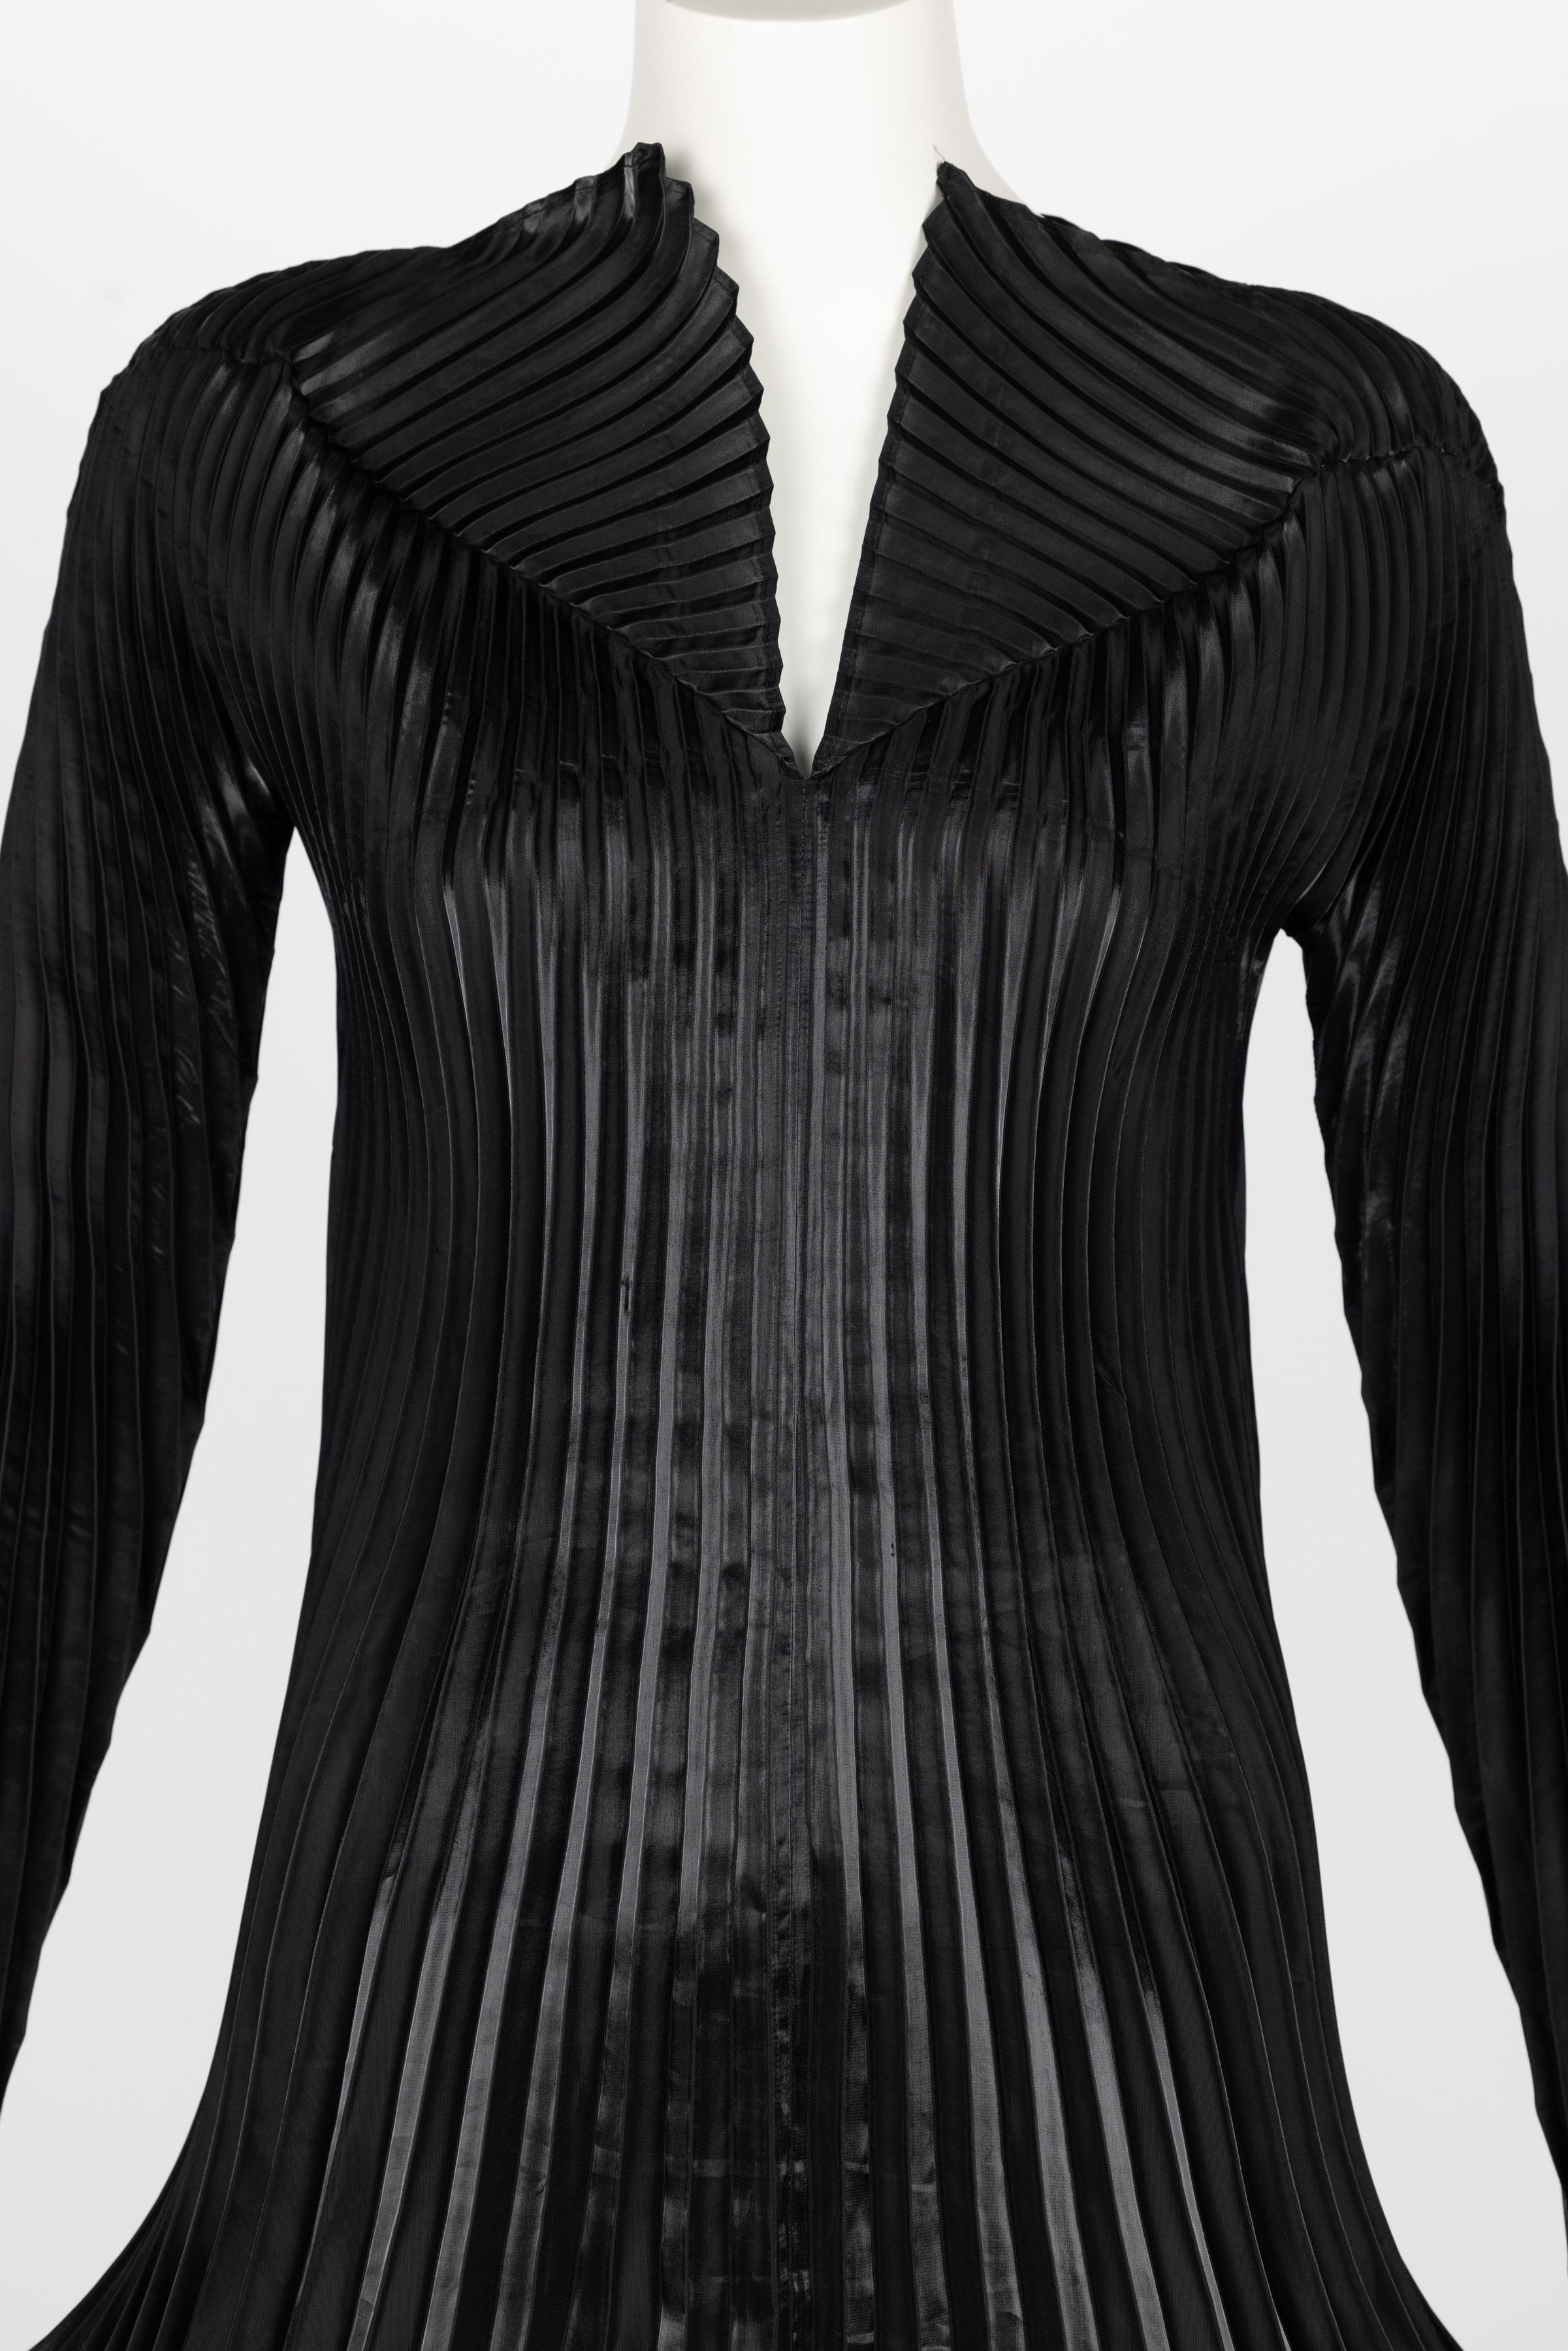 Collectors Issey Miyake Fall 1999 Documented Metallic Black Dress 9